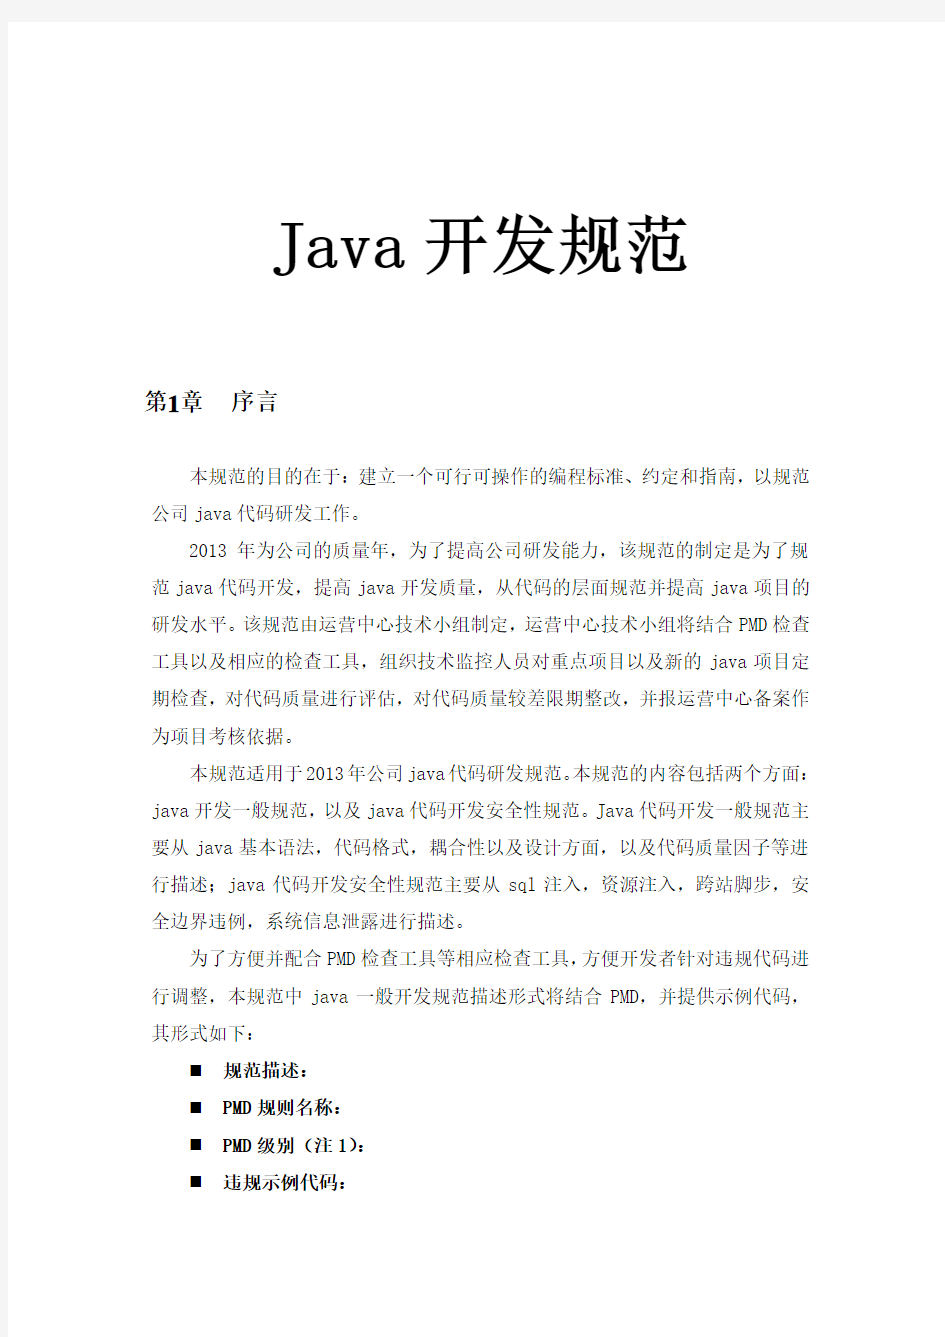 Java开发规范(公司规范)